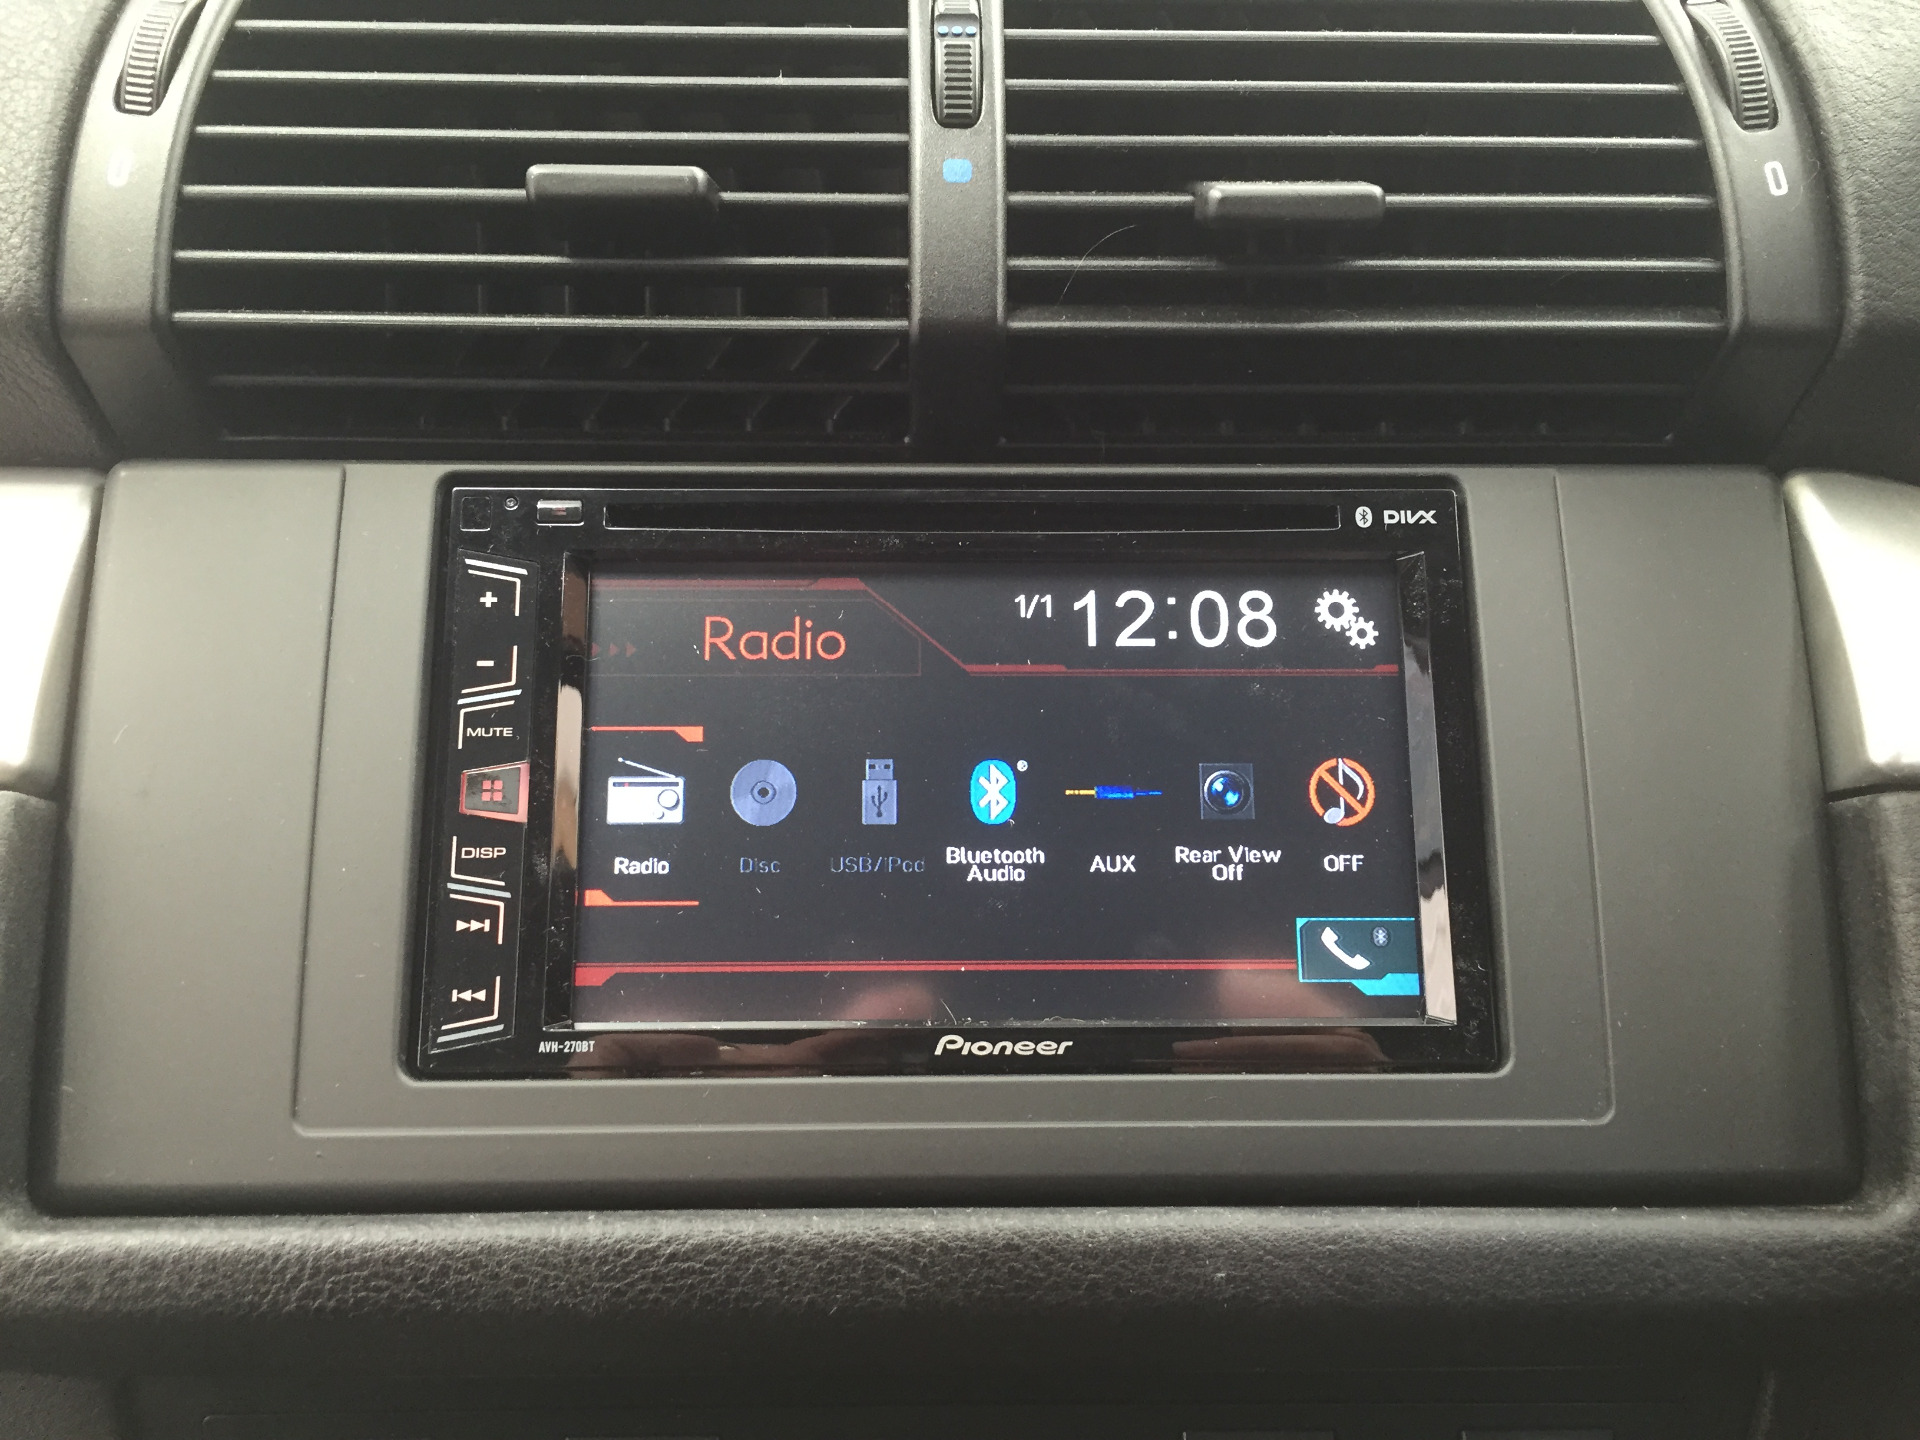 BMW X5 radio